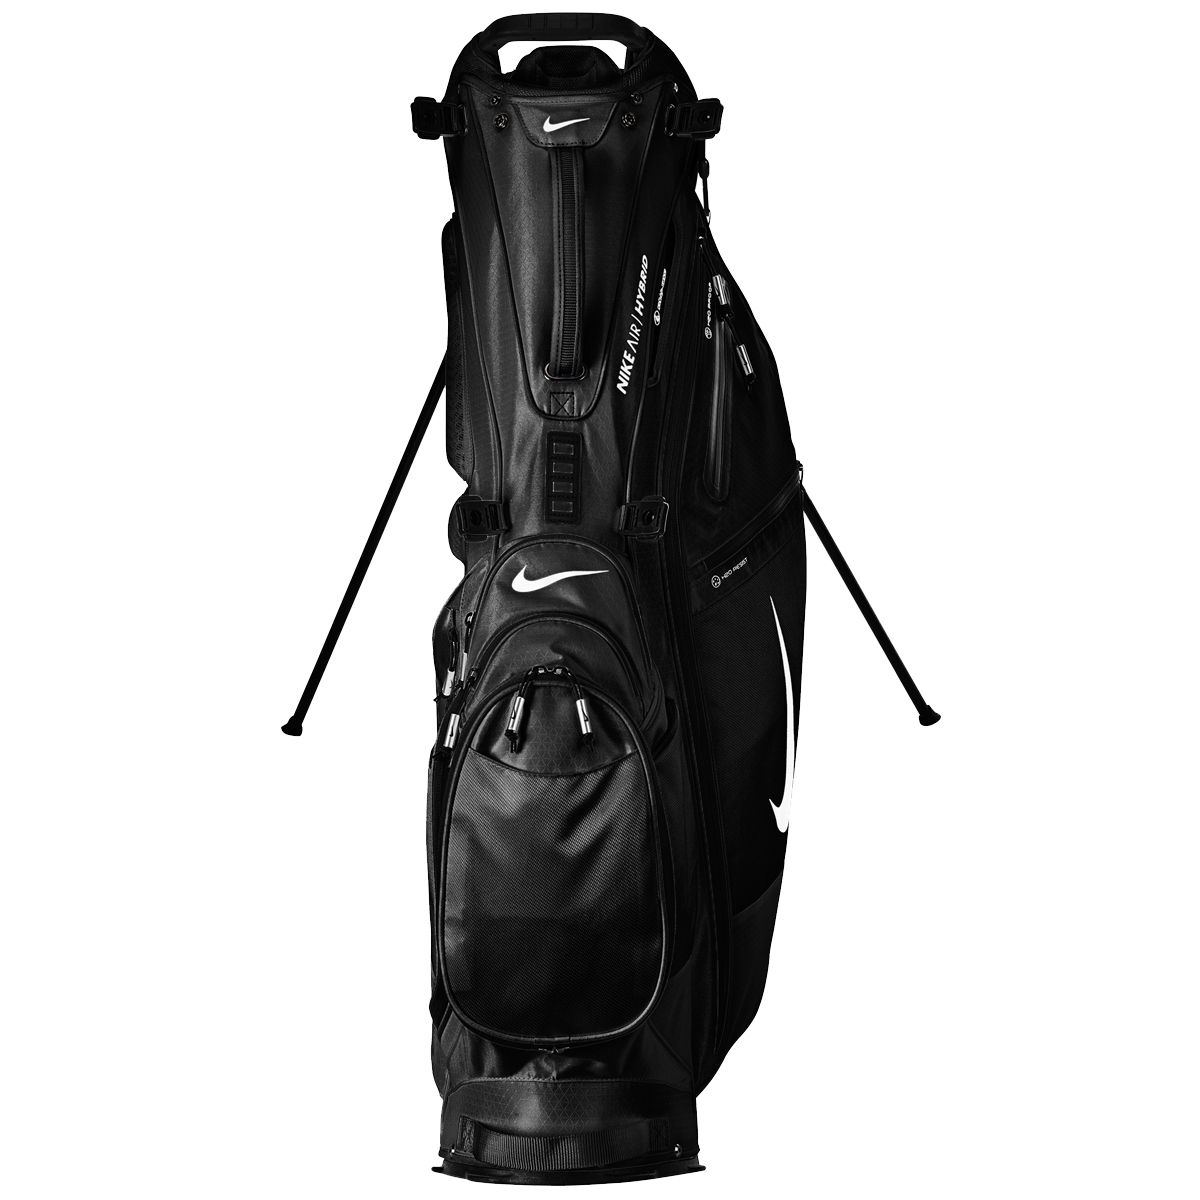 Nike Air Hybrid Carry Stand Golf Bag | Discount Golf World